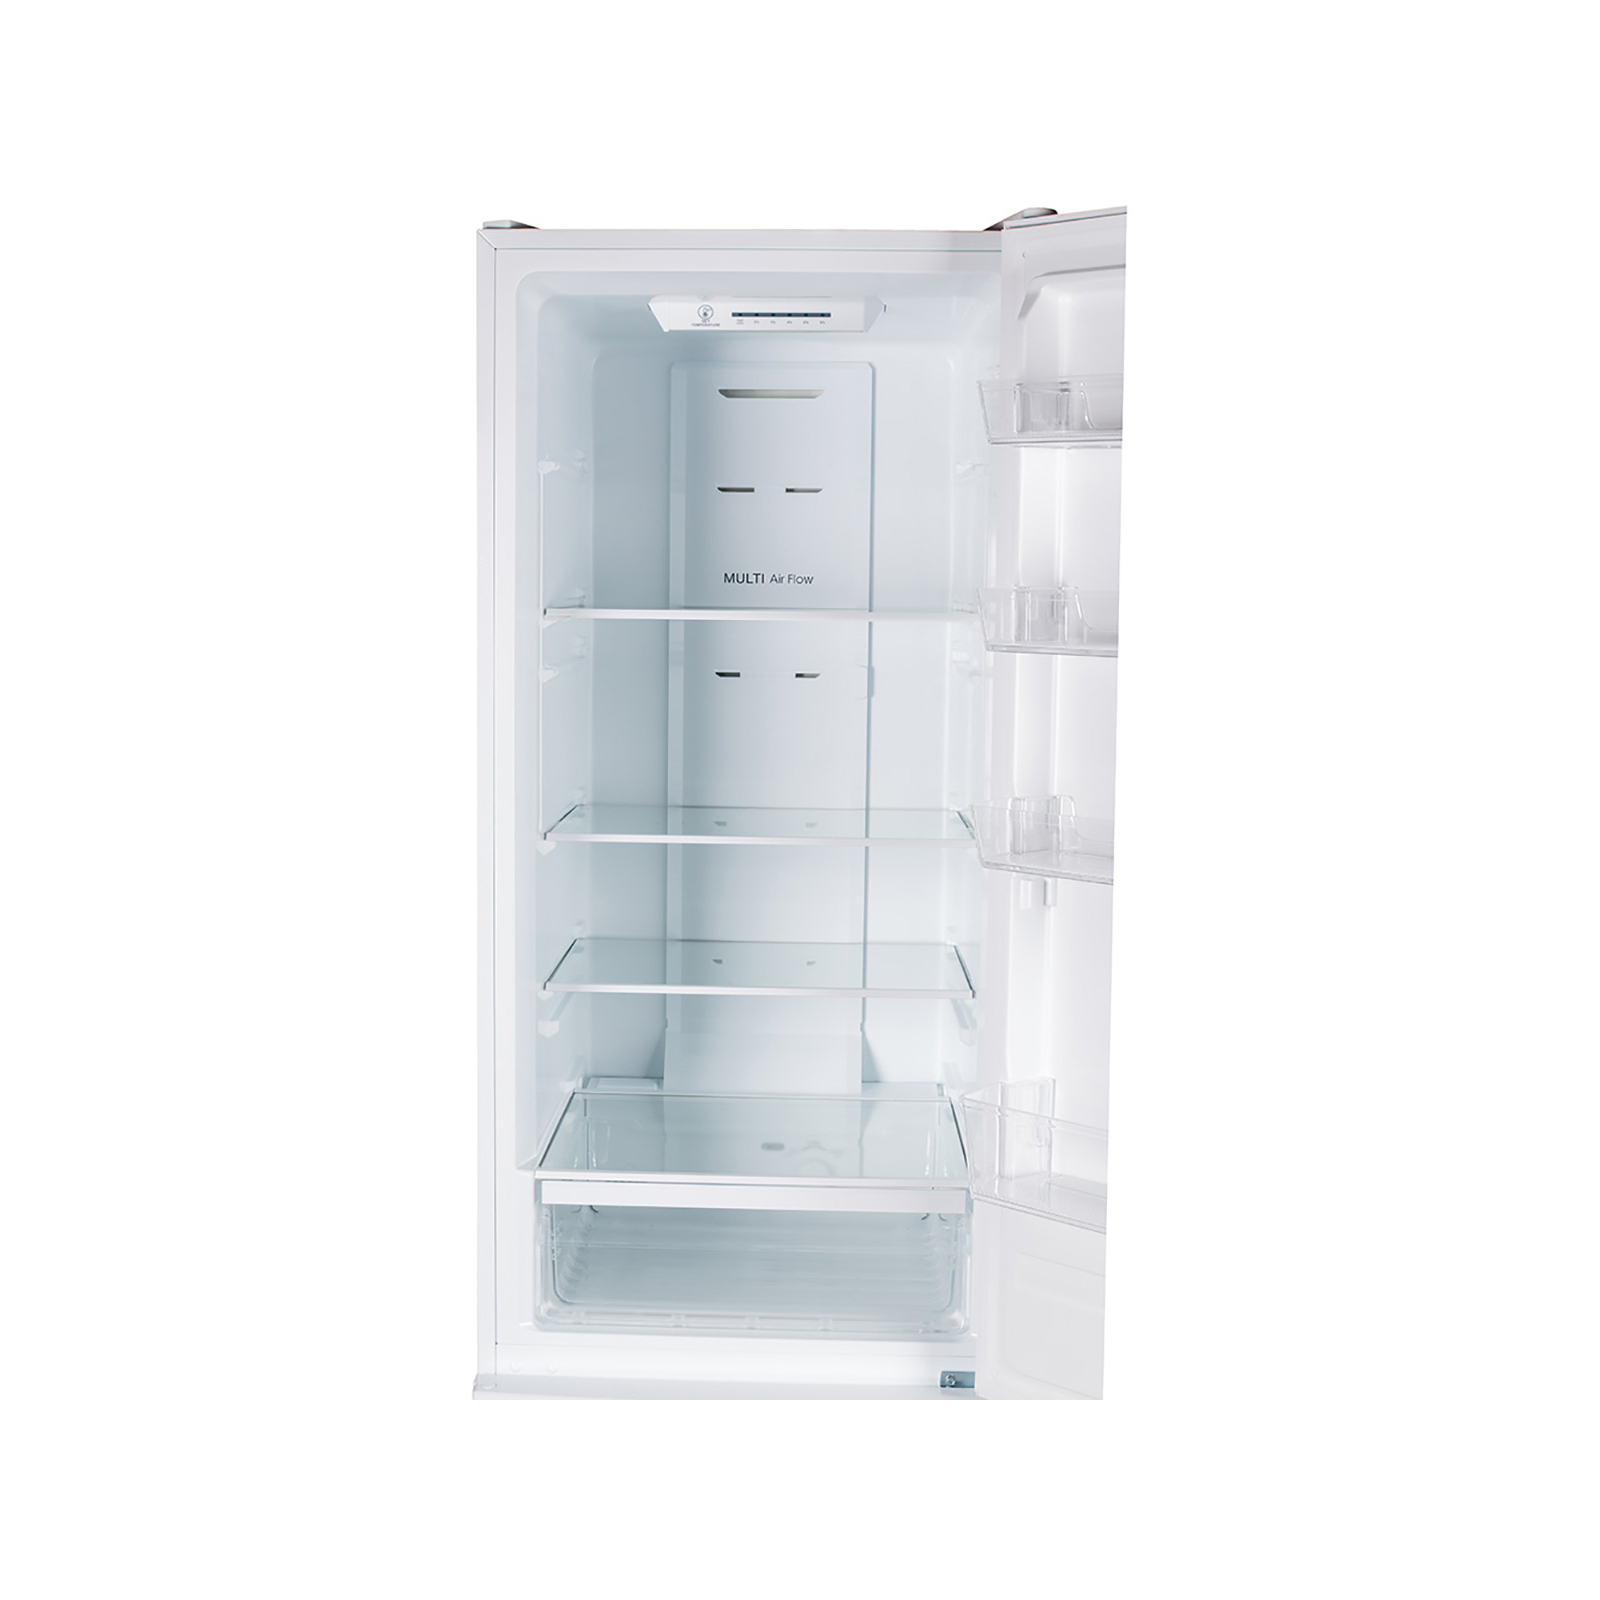 Холодильник Delfa DBFN-200 зображення 4